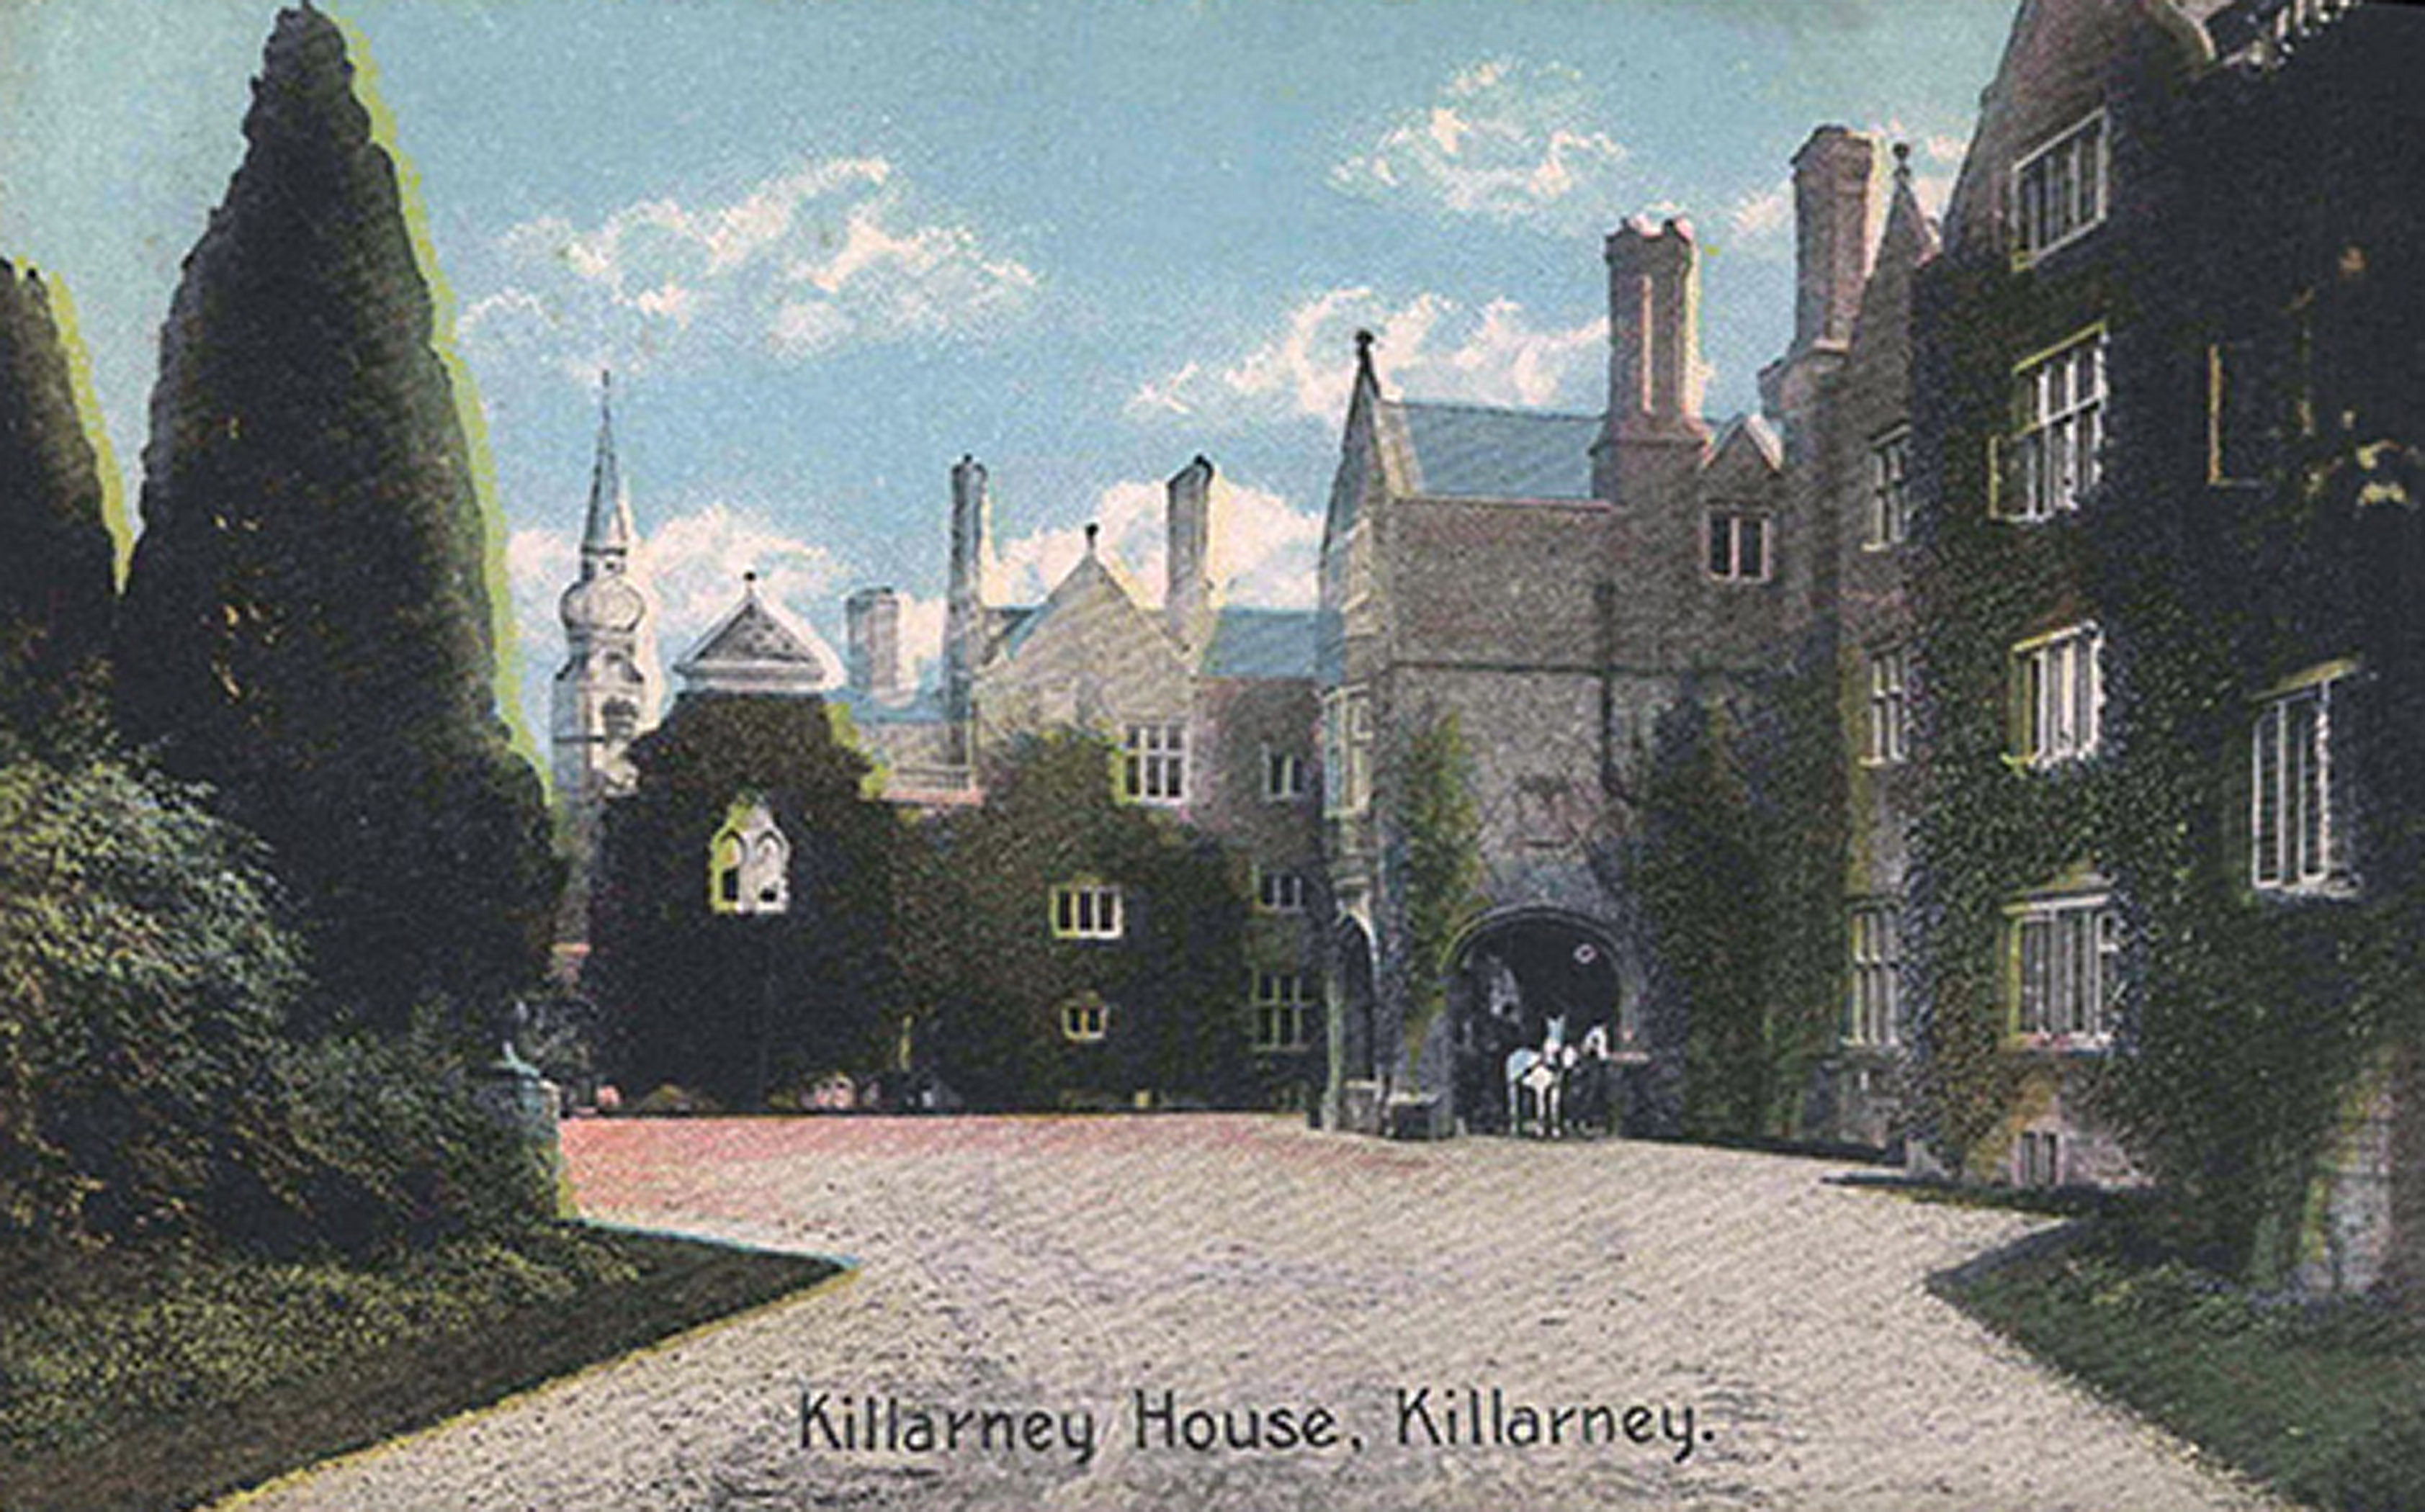 Postcard of Killarney House